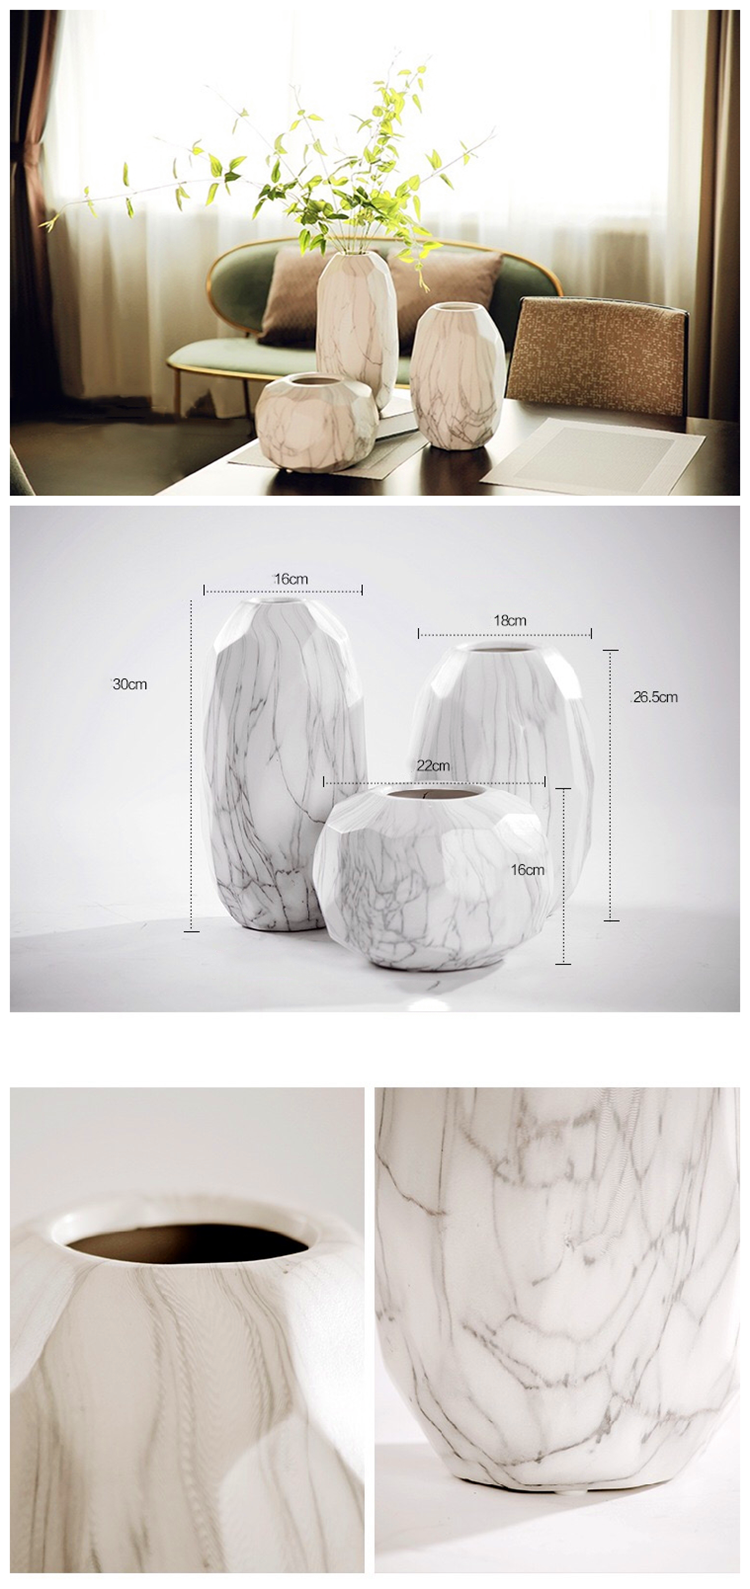 White marble ceramic vase